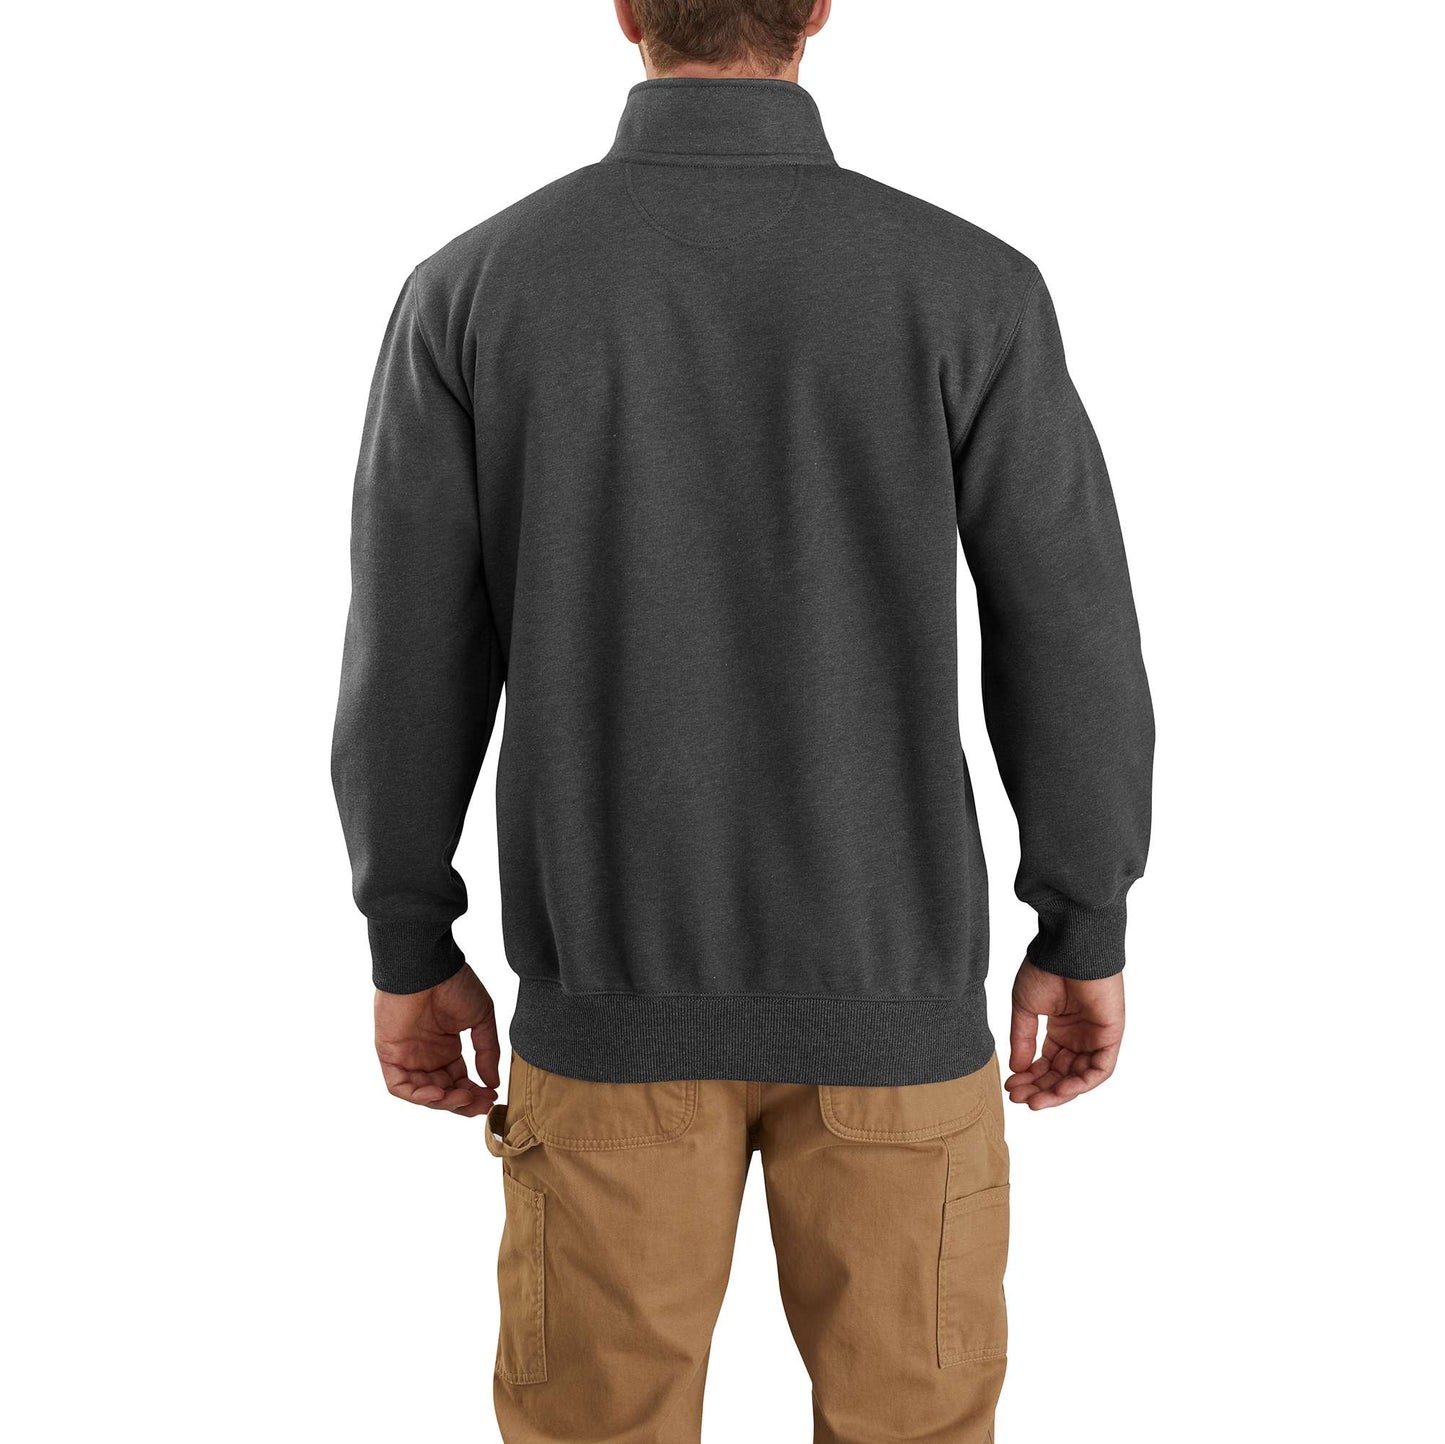 Rain Defender Loose Fit Heavyweight Full-Zip Mock-neck sweatshirt